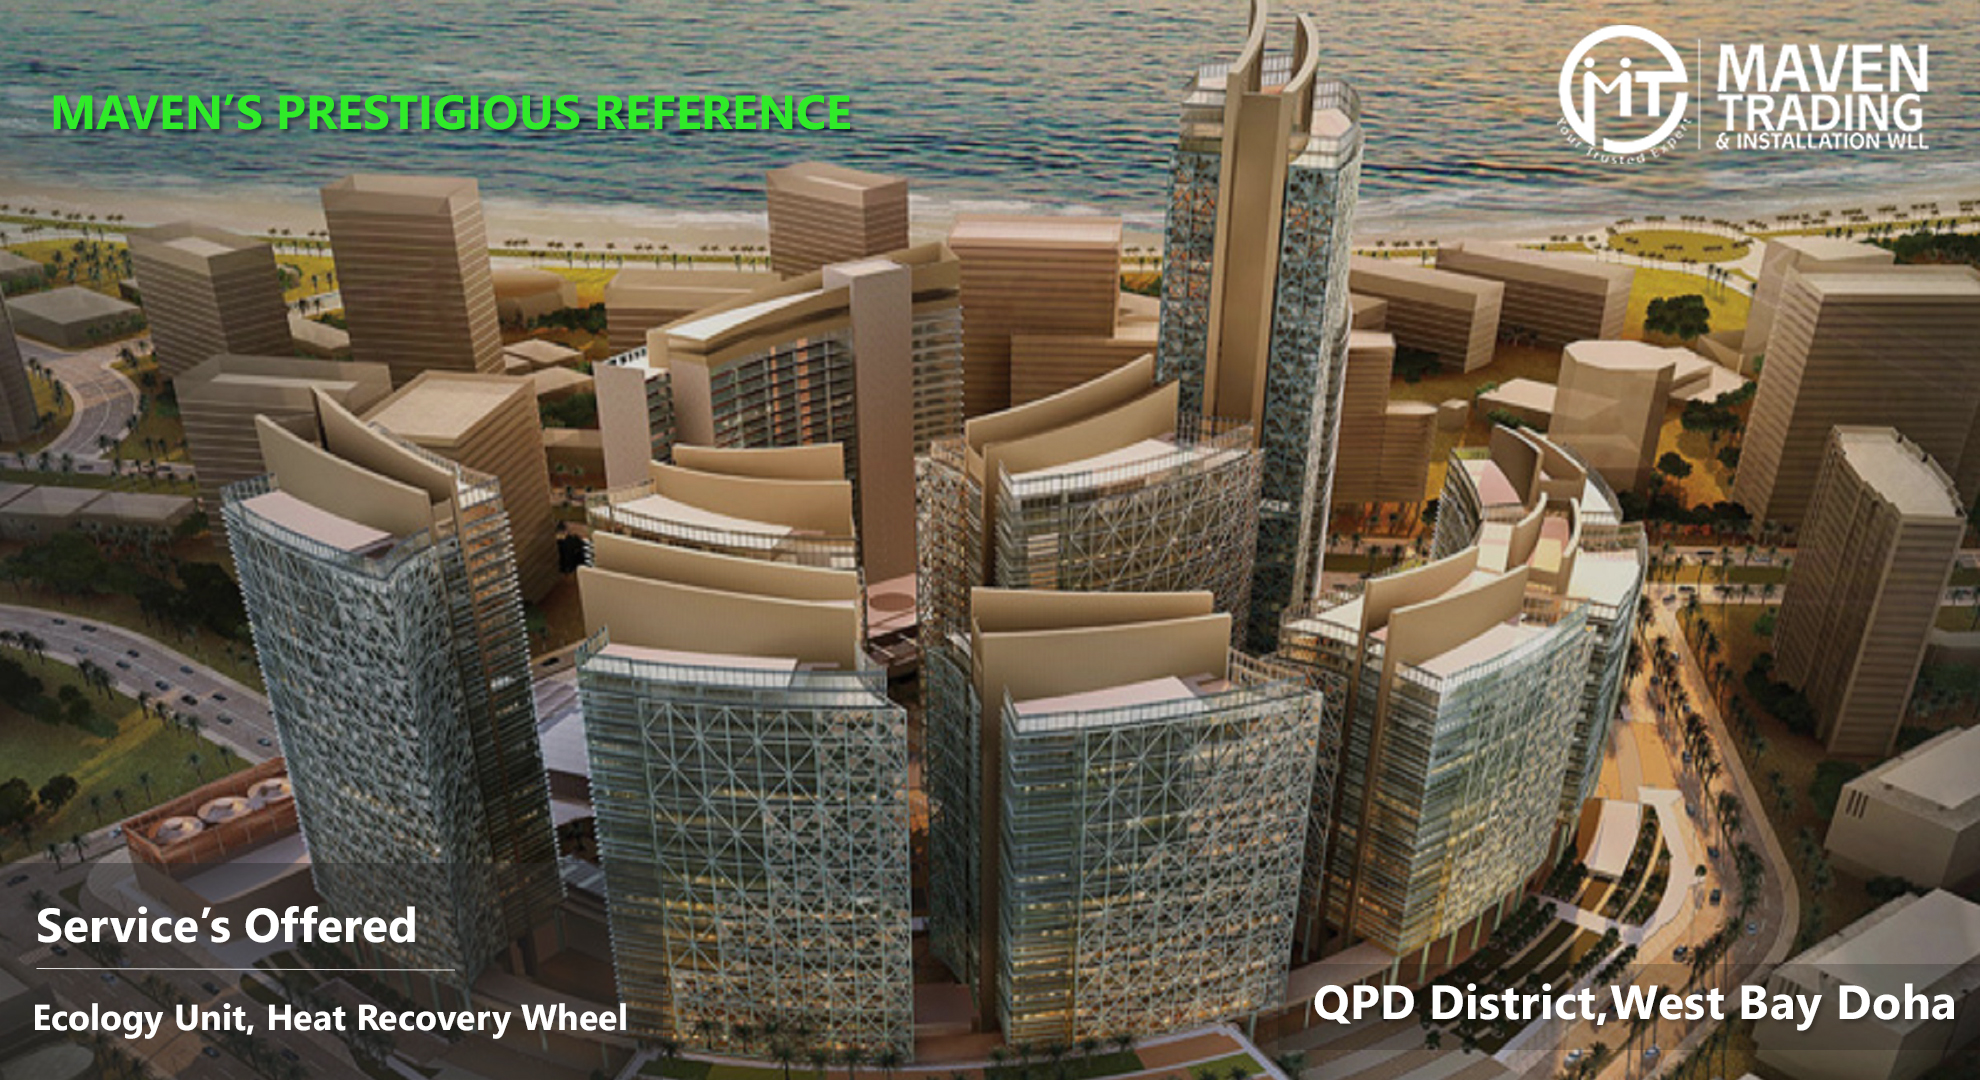 Qatar Petroleum District Project,Petroleum District Project In Qatar,QPD In Qatar,qatar petroleum district project,qpd in qatar